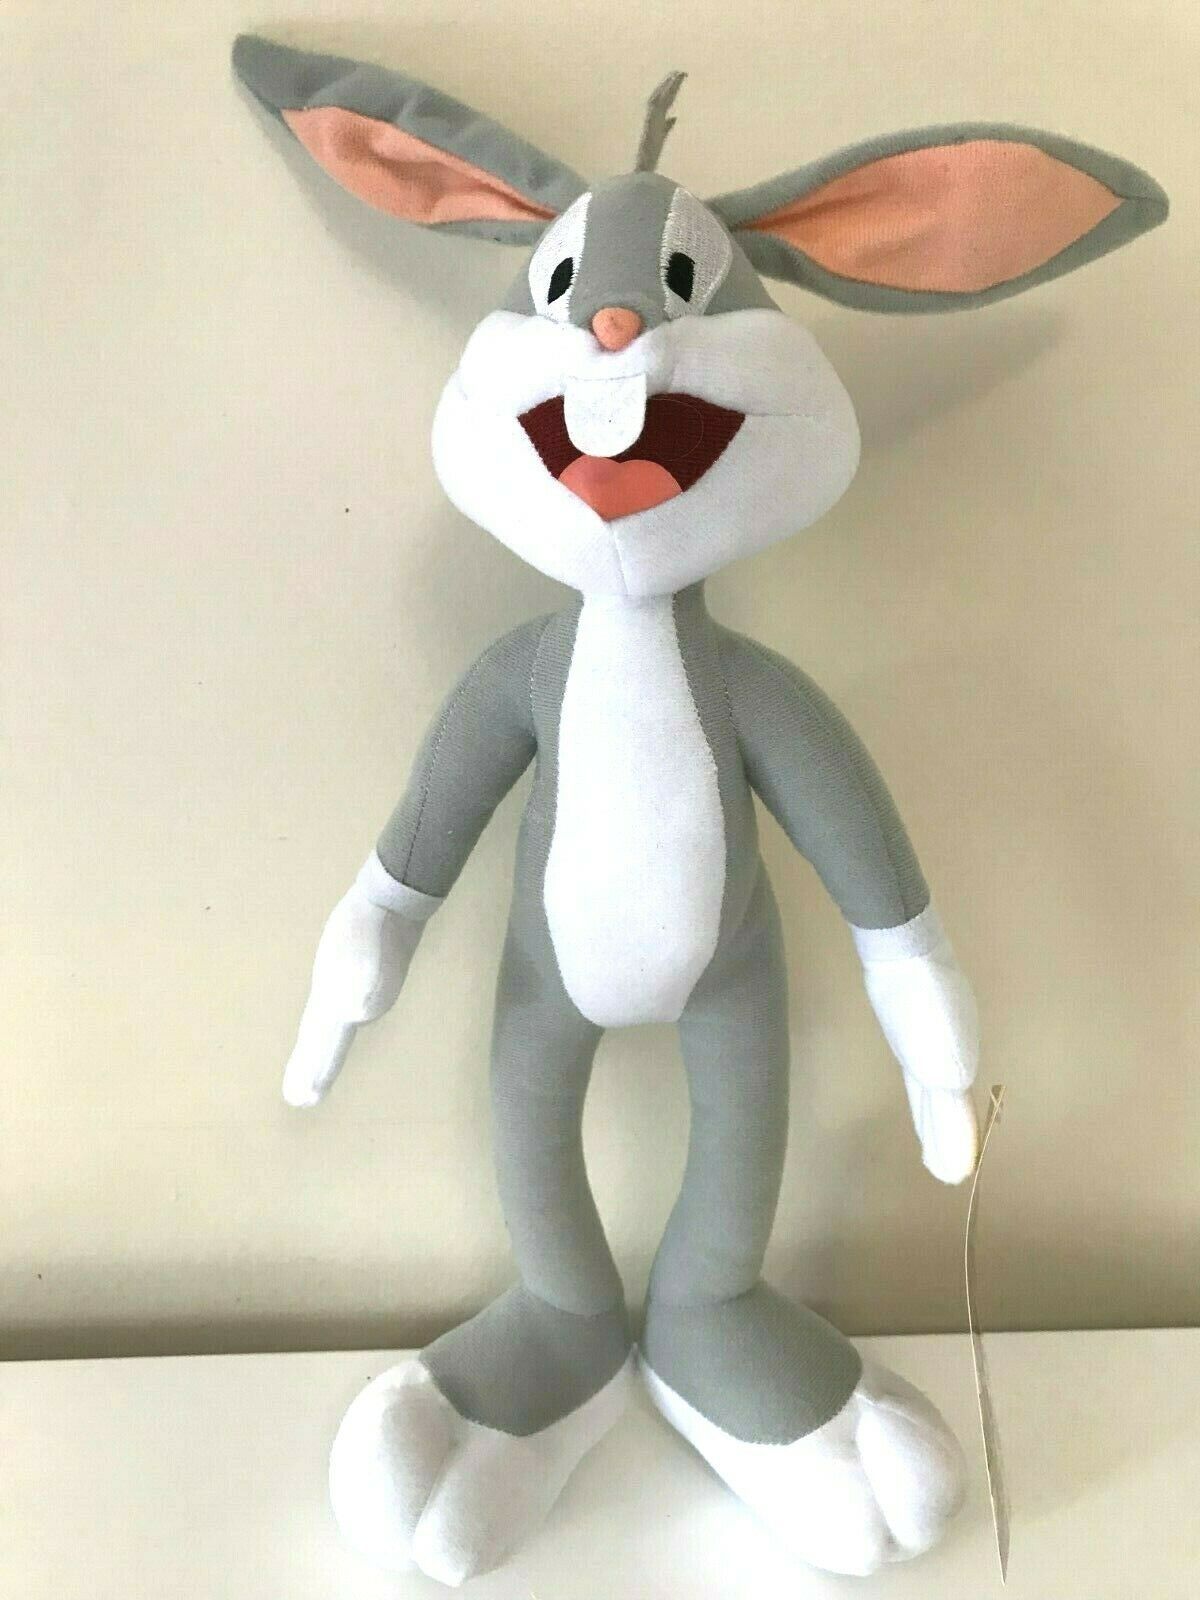 bugs bunny plush toy